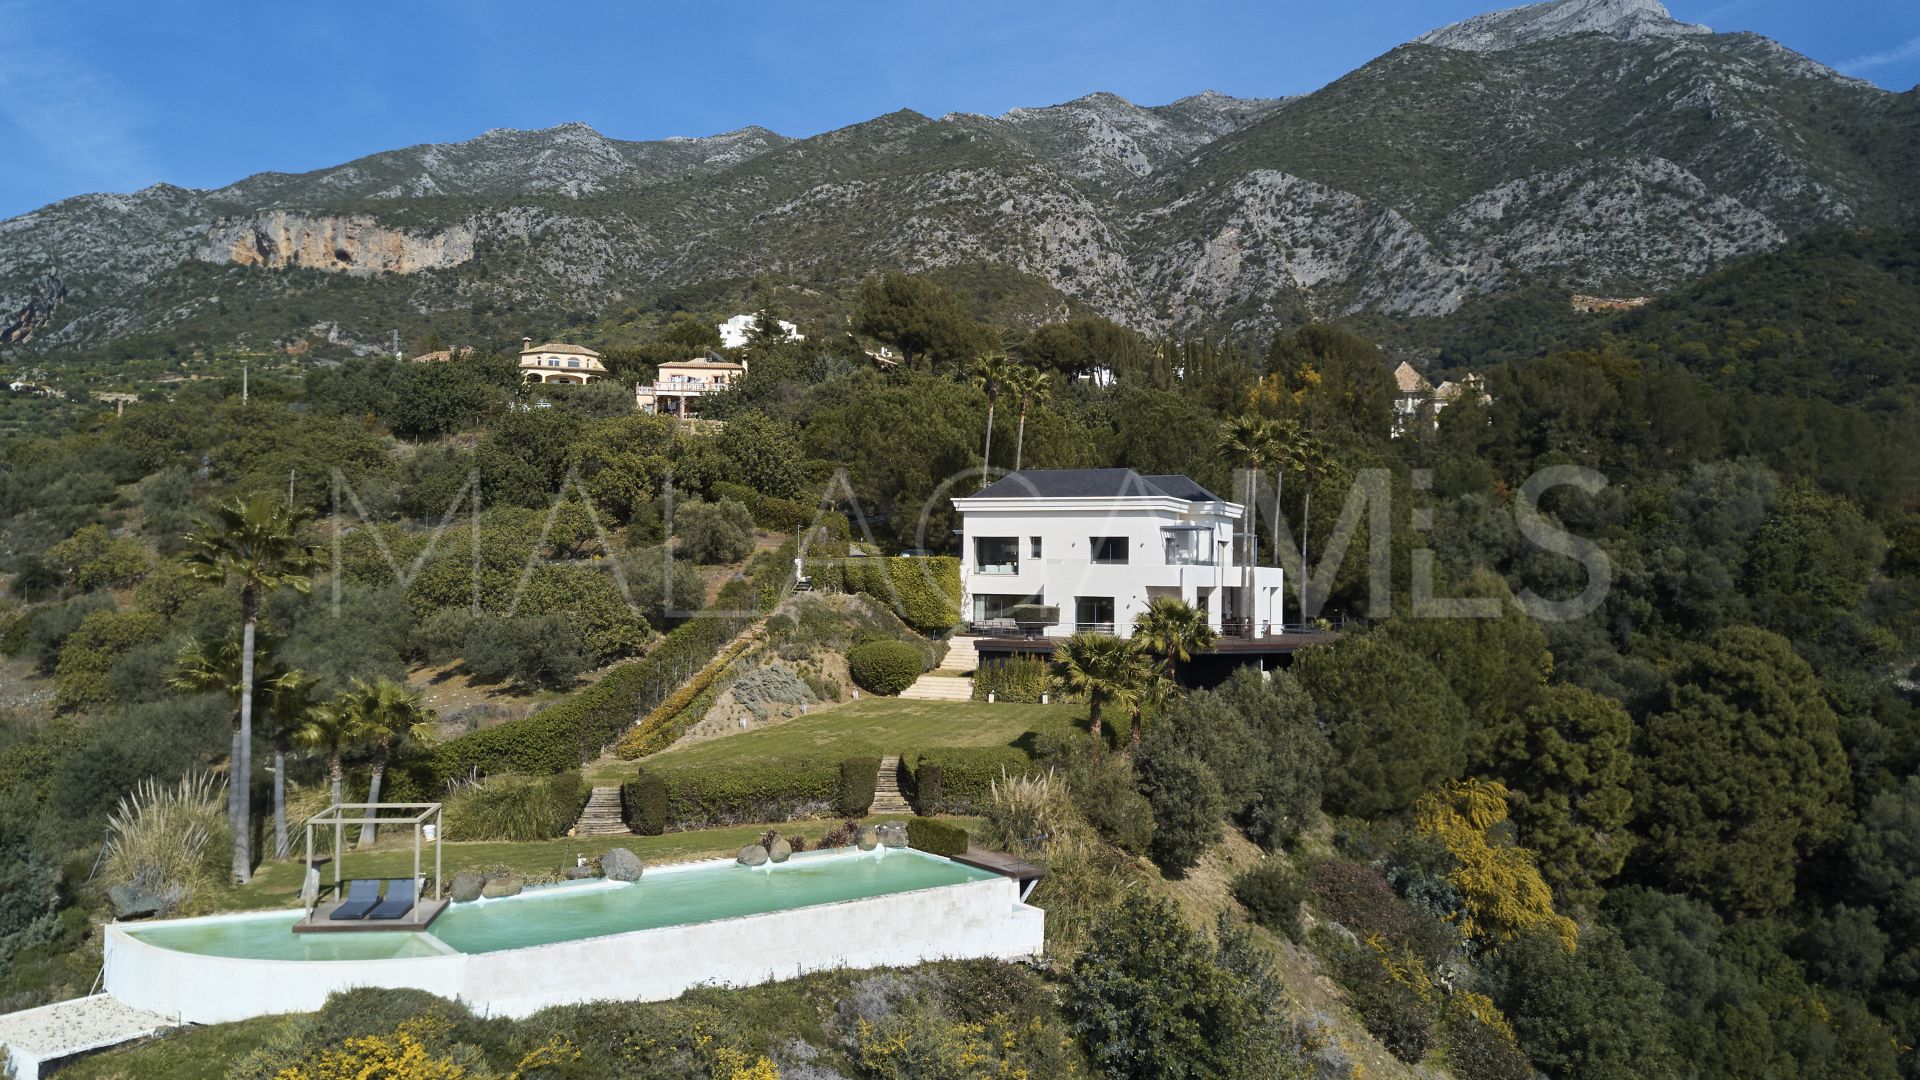 Villa for sale in Carretera de Istan with 5 bedrooms